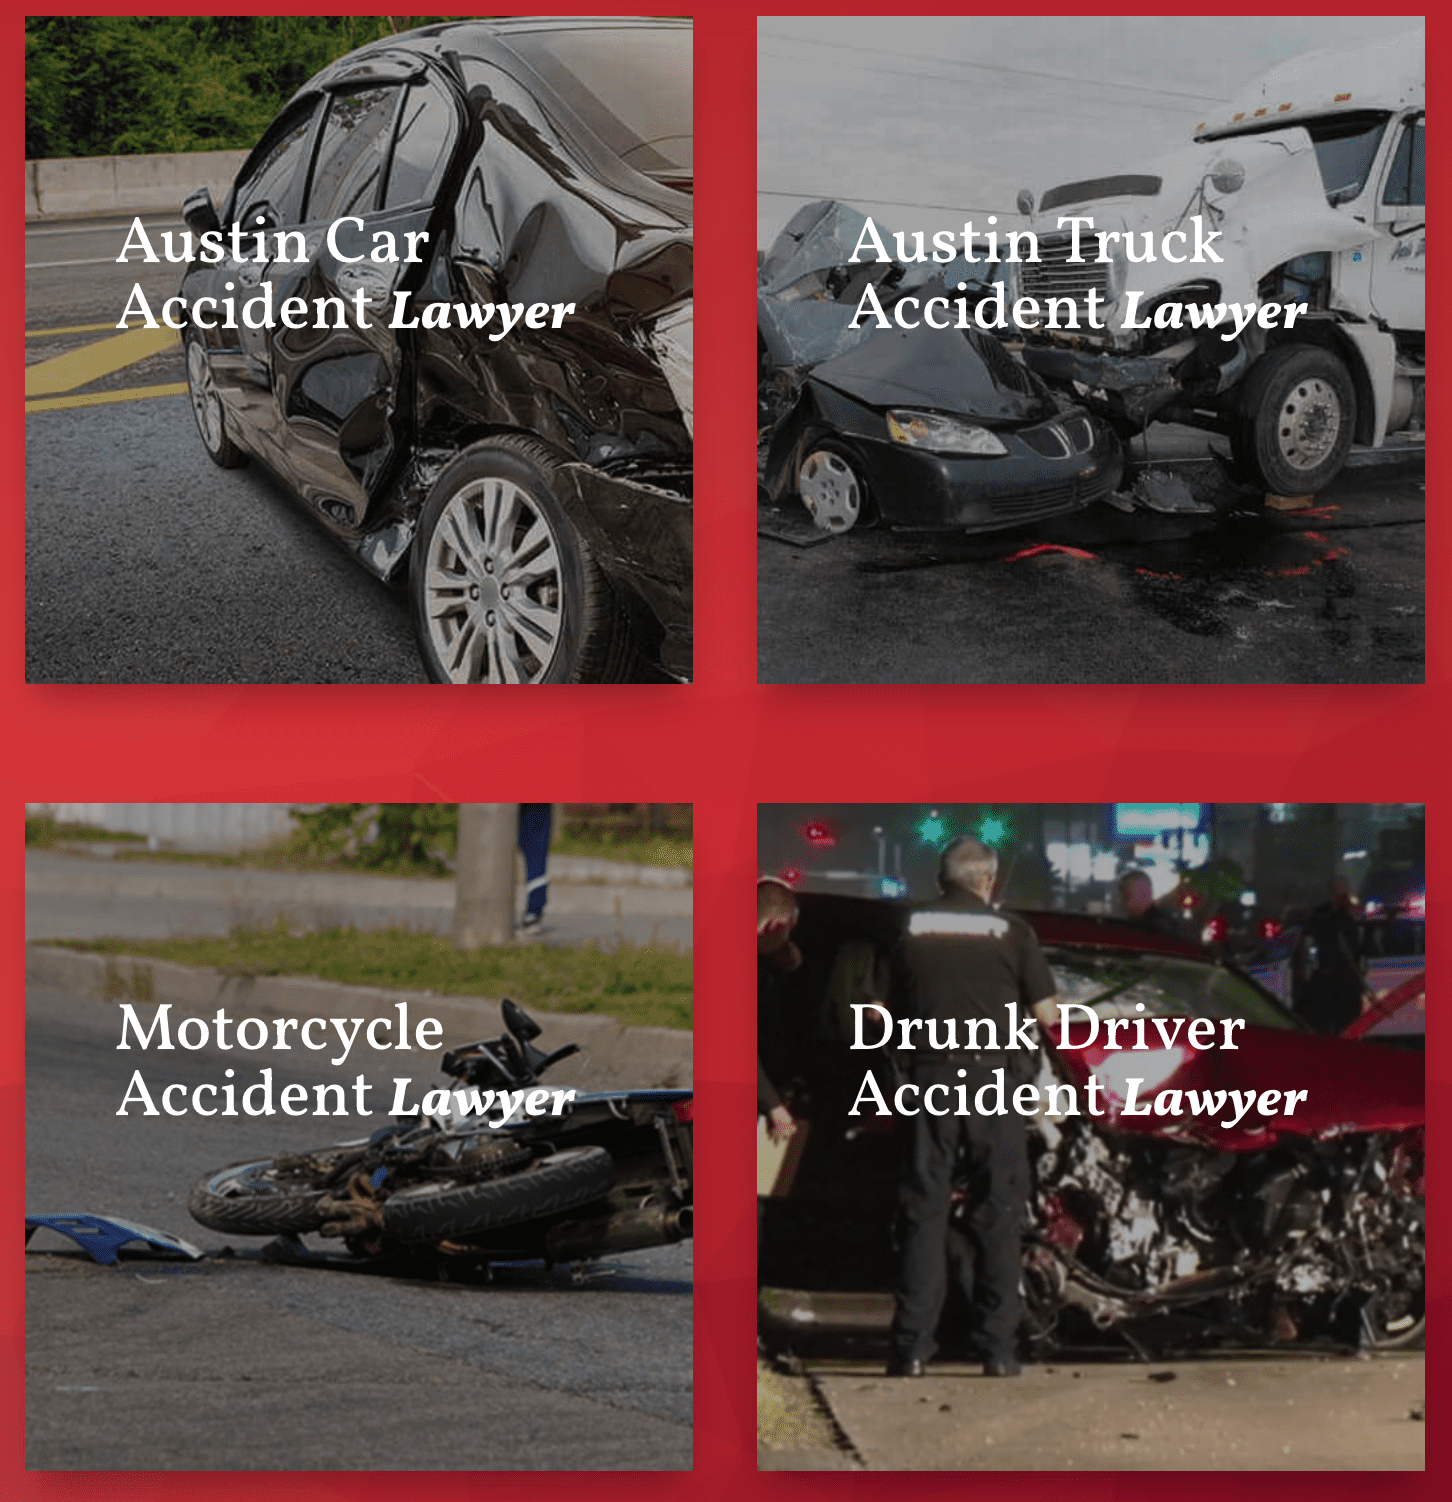 Austin car accident lawyer, austin truck accident lawyer, motorcycle accident lawyer, drunk driver accident lawyer